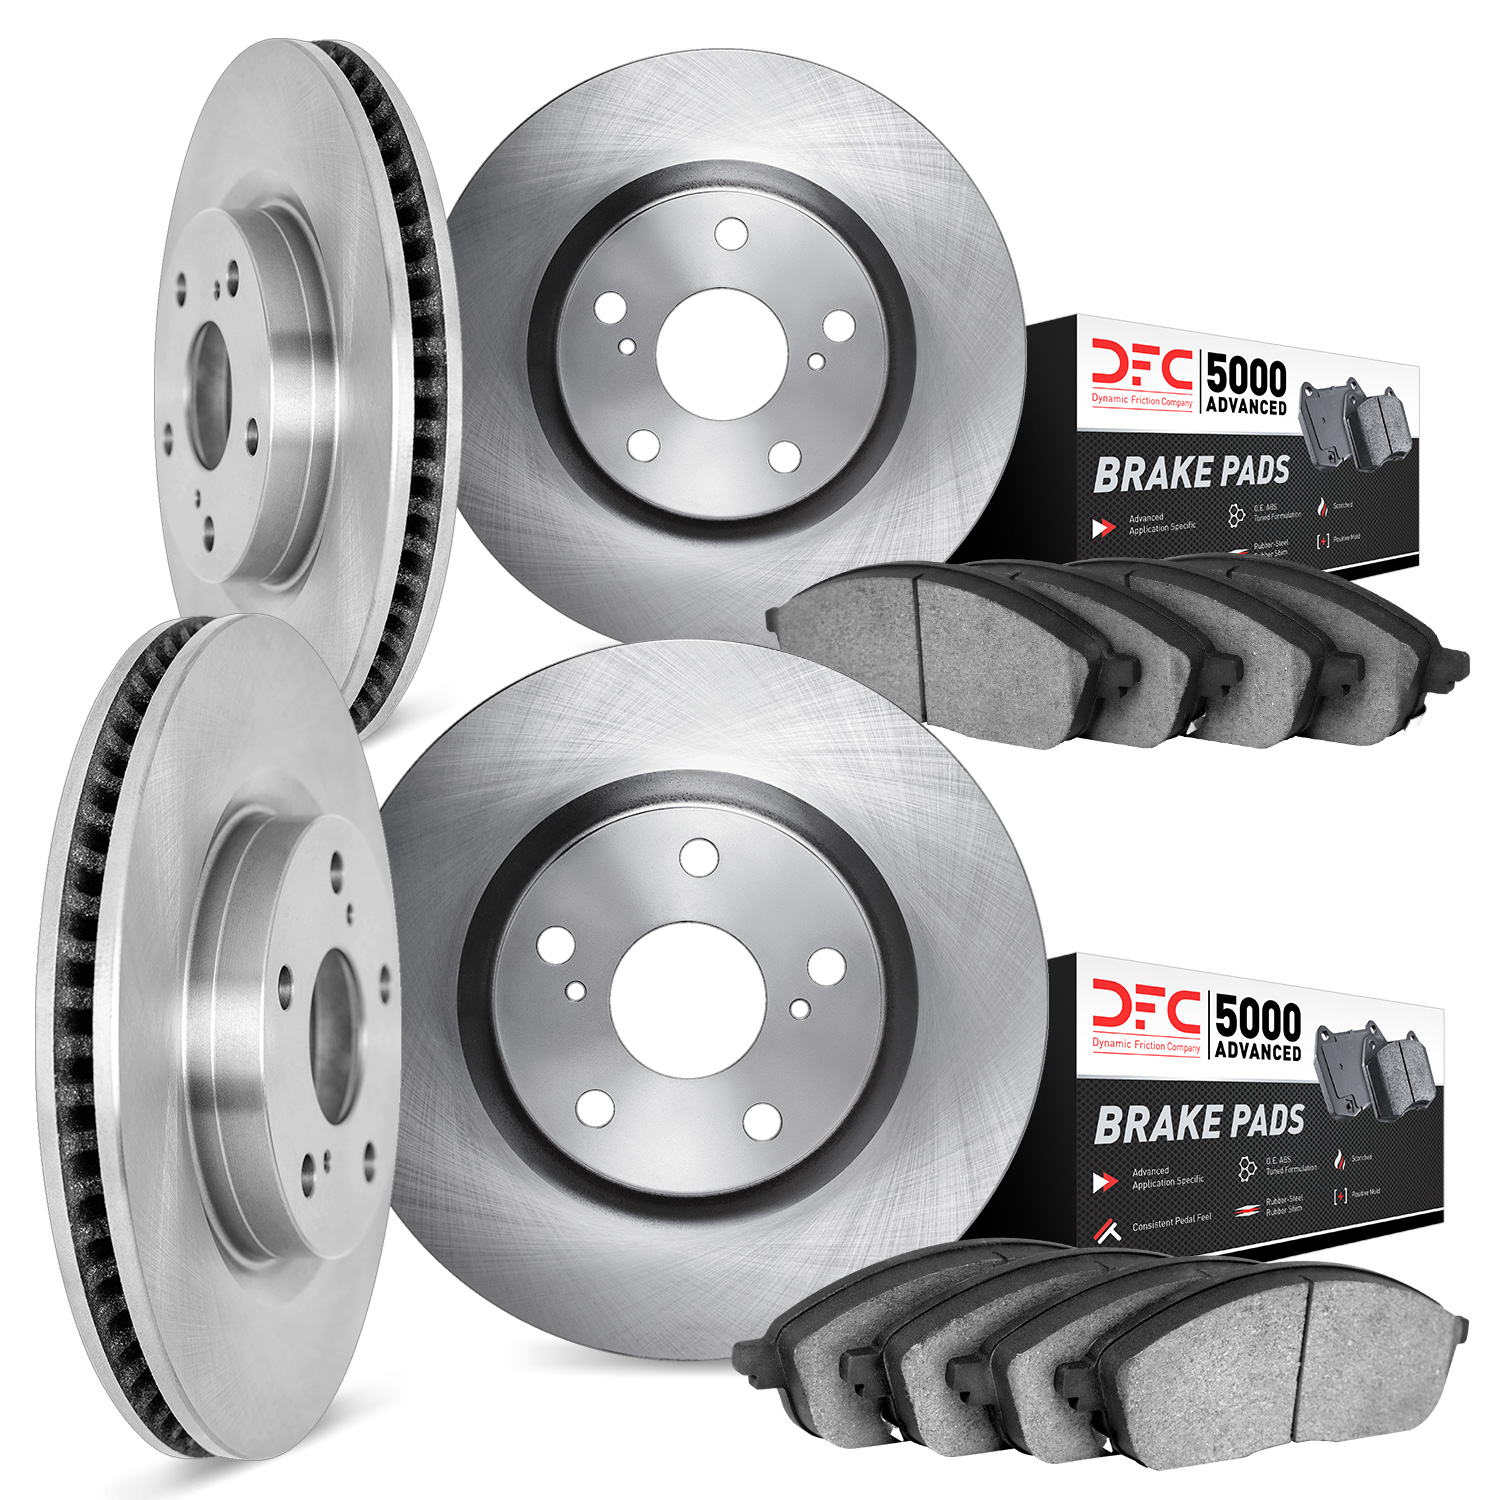 6504-13009 Brake Rotors w/5000 Advanced Brake Pads Kit, Fits Select Subaru, Position: Front and Rear